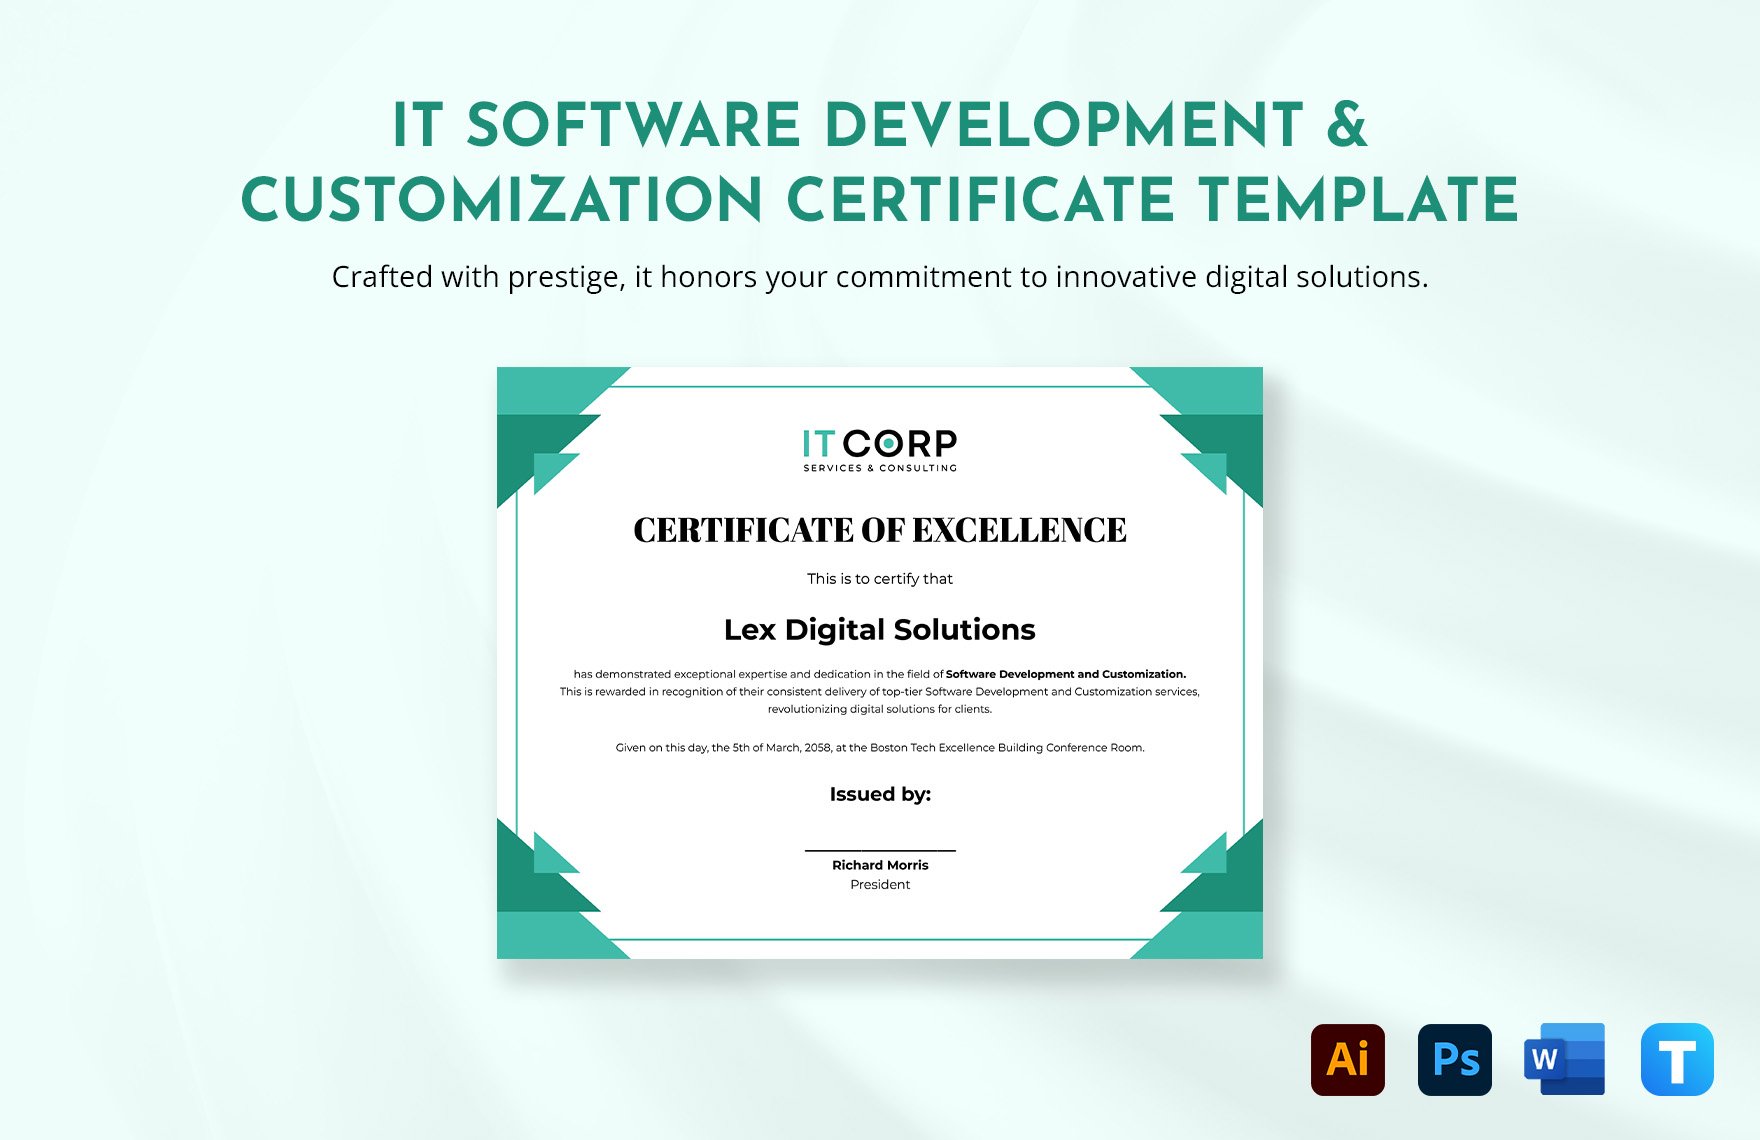 IT Software Development & Customization Certificate Template in Word, Illustrator, PSD